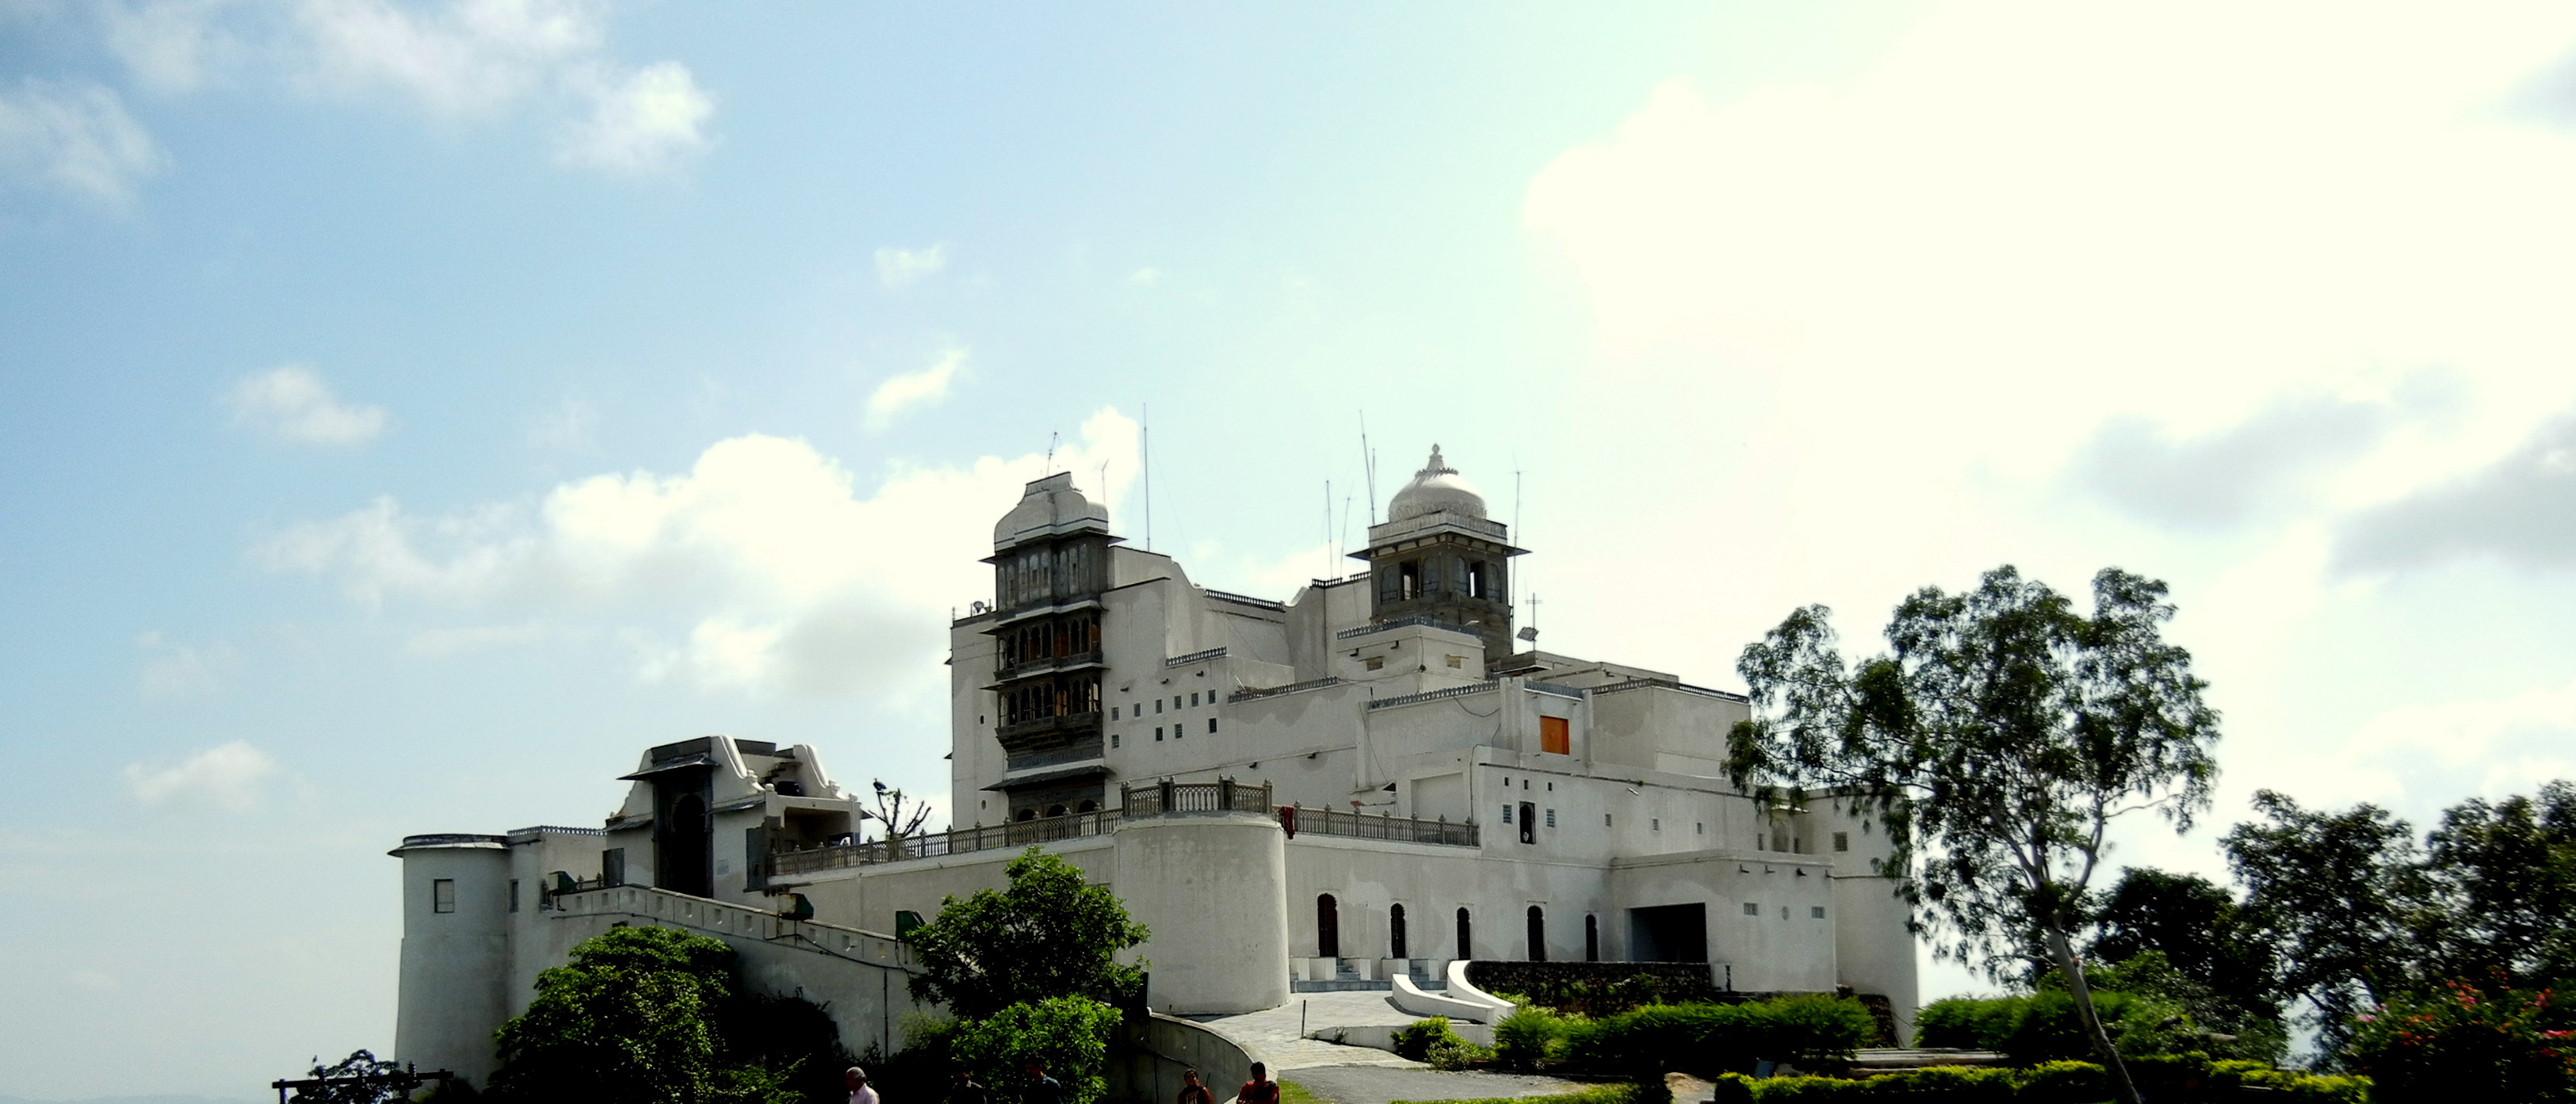 Sajjangarh Fort – The Past and Present